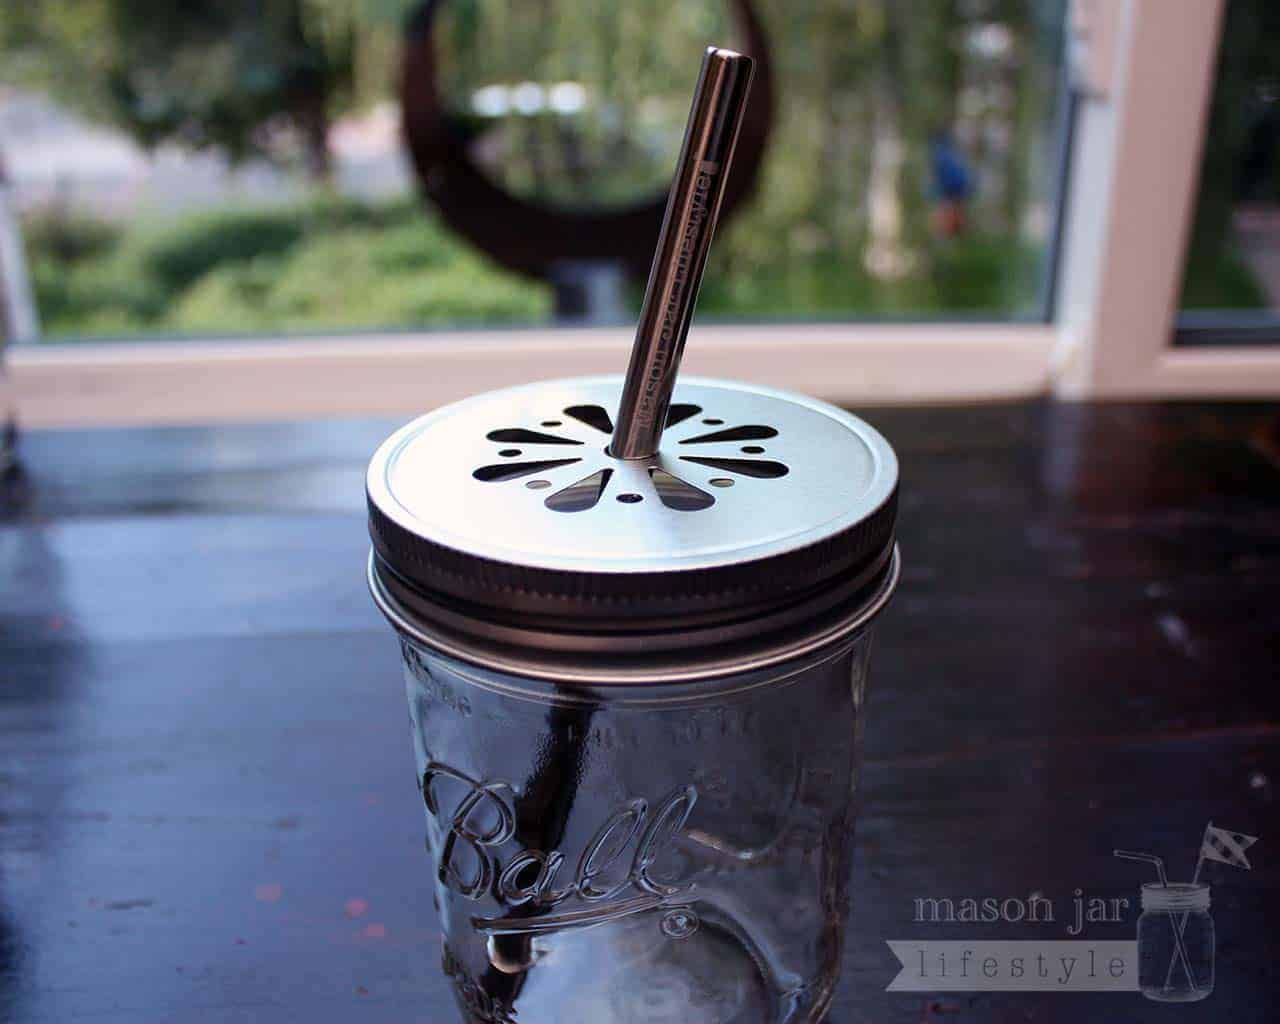 Glass Straw, Mason Jar Lifestyle